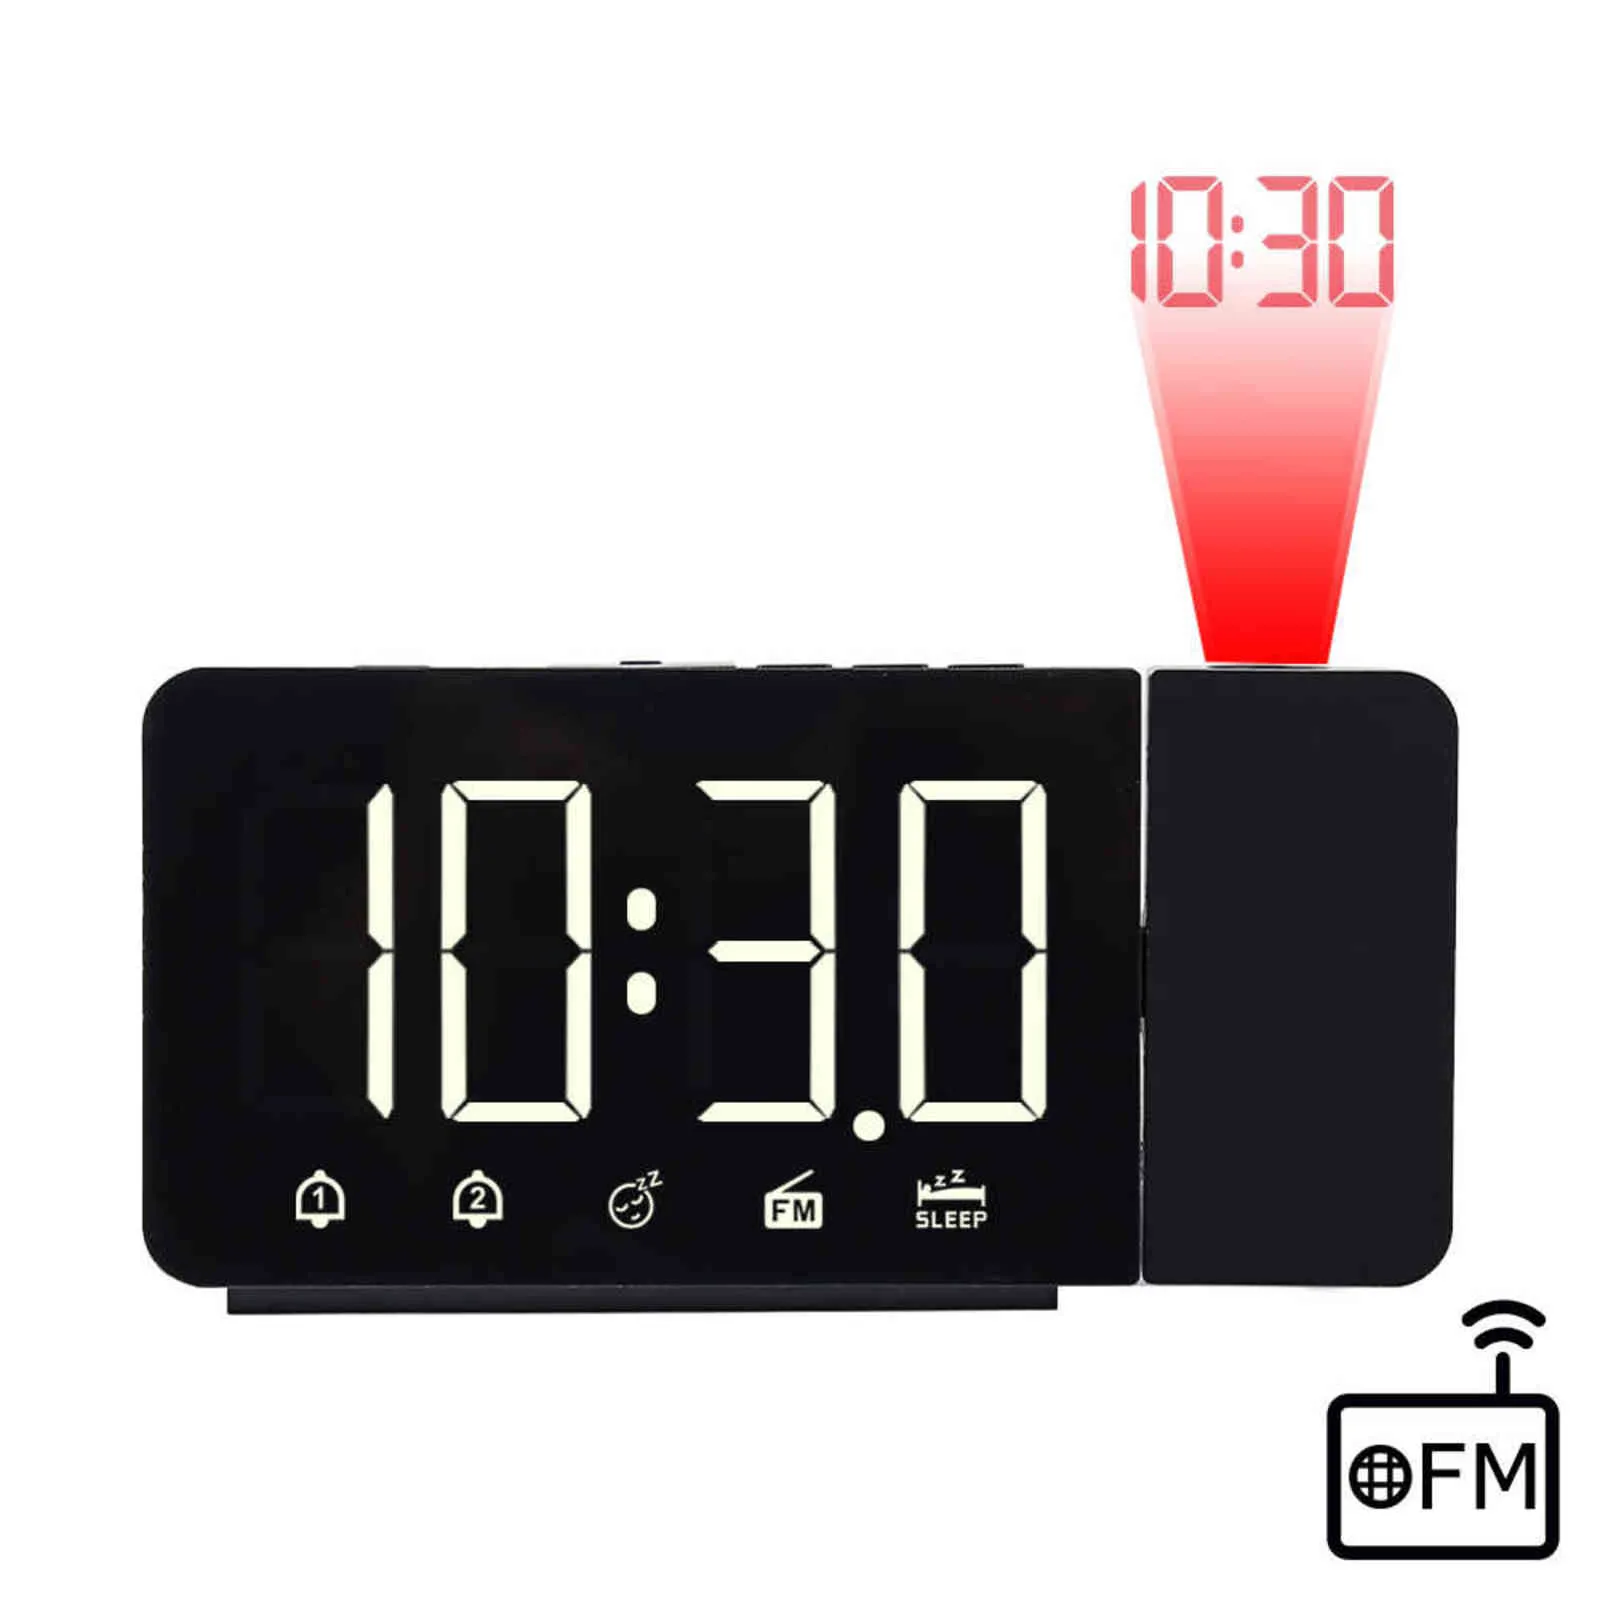 Fanju FJ3211 راديو FM LED ساعة رقمية إنذار مزدوج الجدول مكتب ساعة العرض USB استيقظ ساعة مع وقت الإسقاط الغفوة 211112